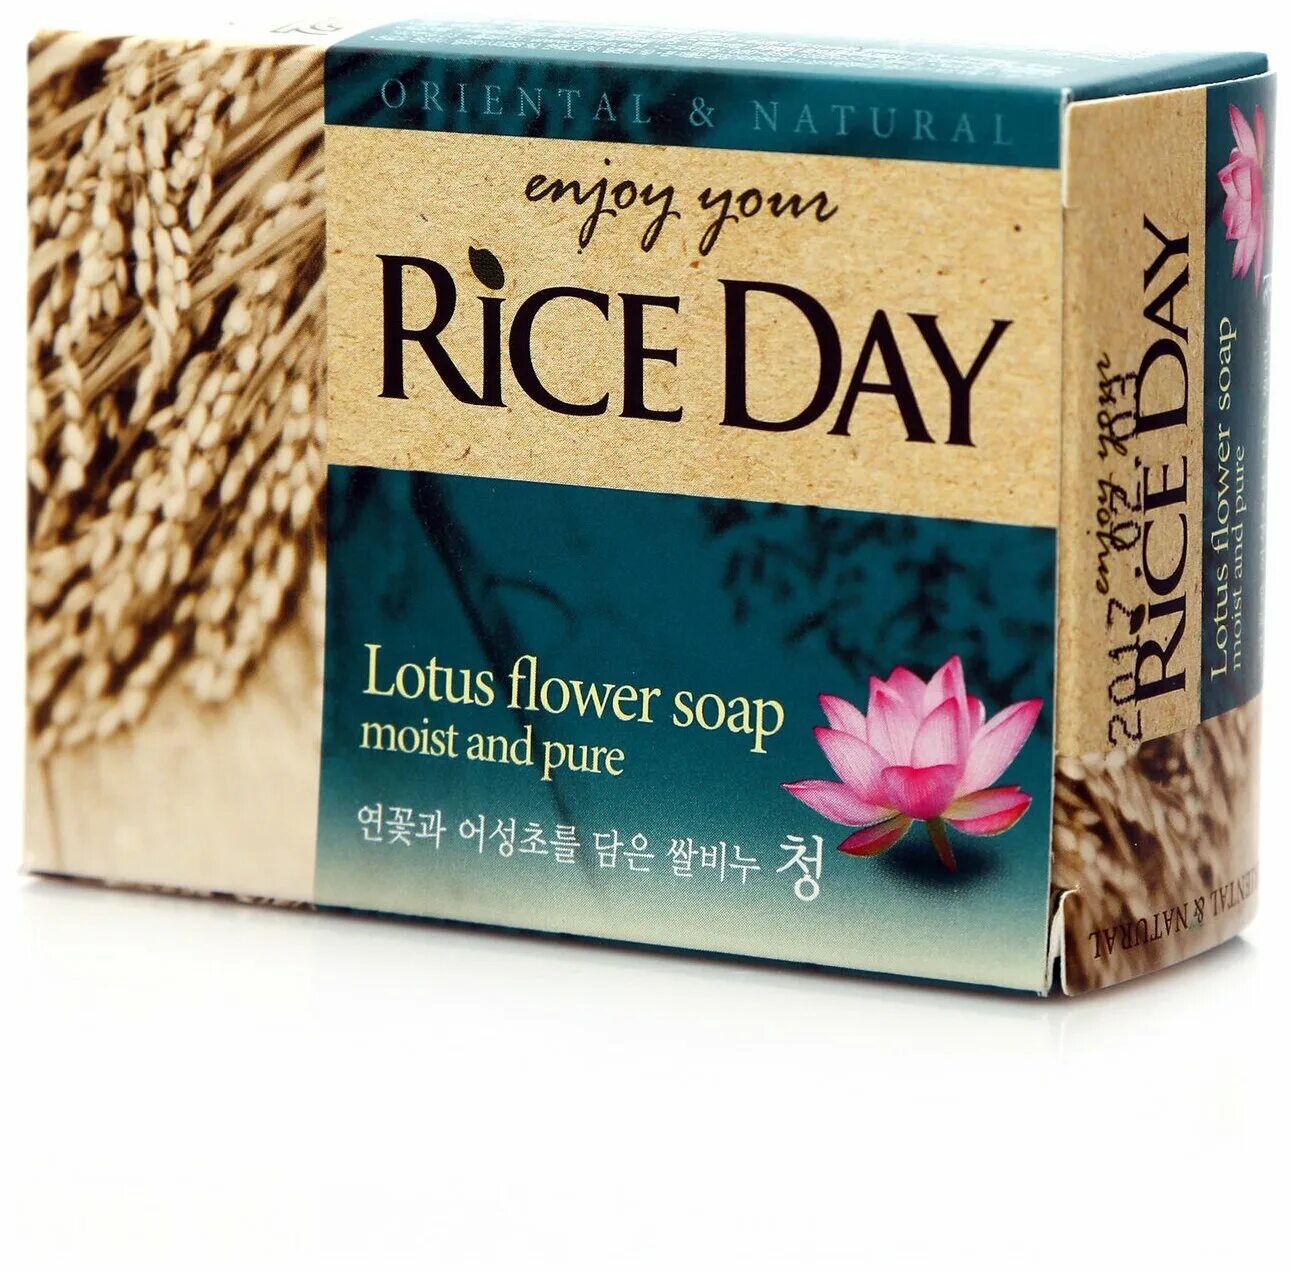 Rice day. Rice Day мыло Лотос. Lion Riceday Soap (Cheong) 100g мыло туалетное с экстрактом лотоса 100г. Lion Riceday Soap (Yoon) 100g мыло туалетное с экстрактом рисовых отрубей. Мыло Rice Day для лица.